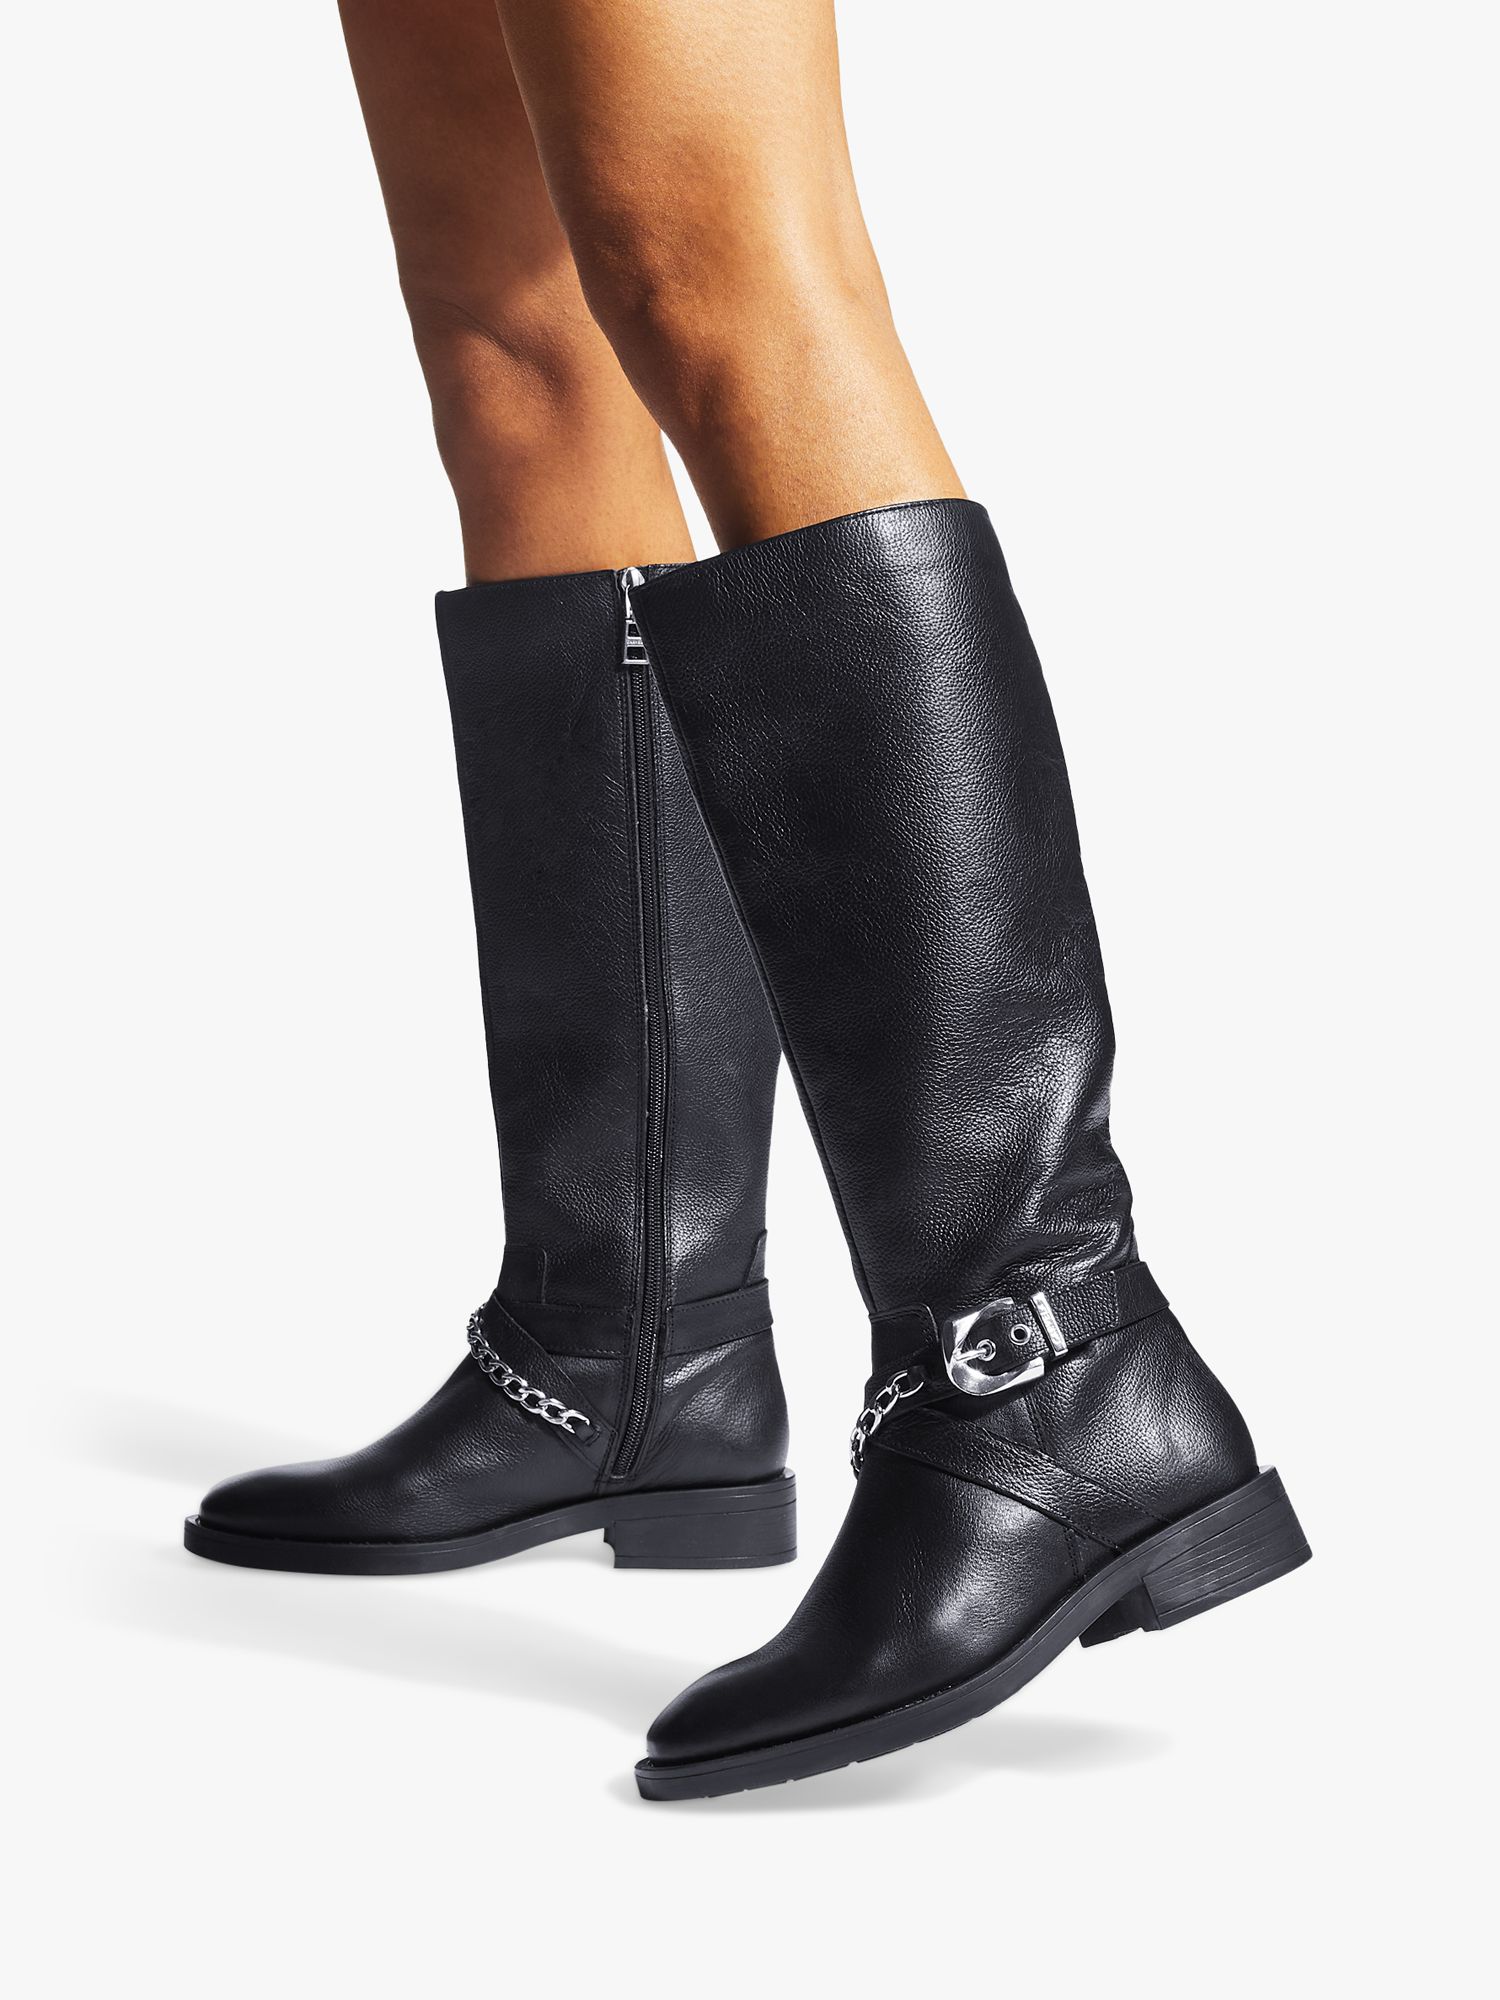 Carvela Rider Leather Knee High Boots, Black at John Lewis & Partners